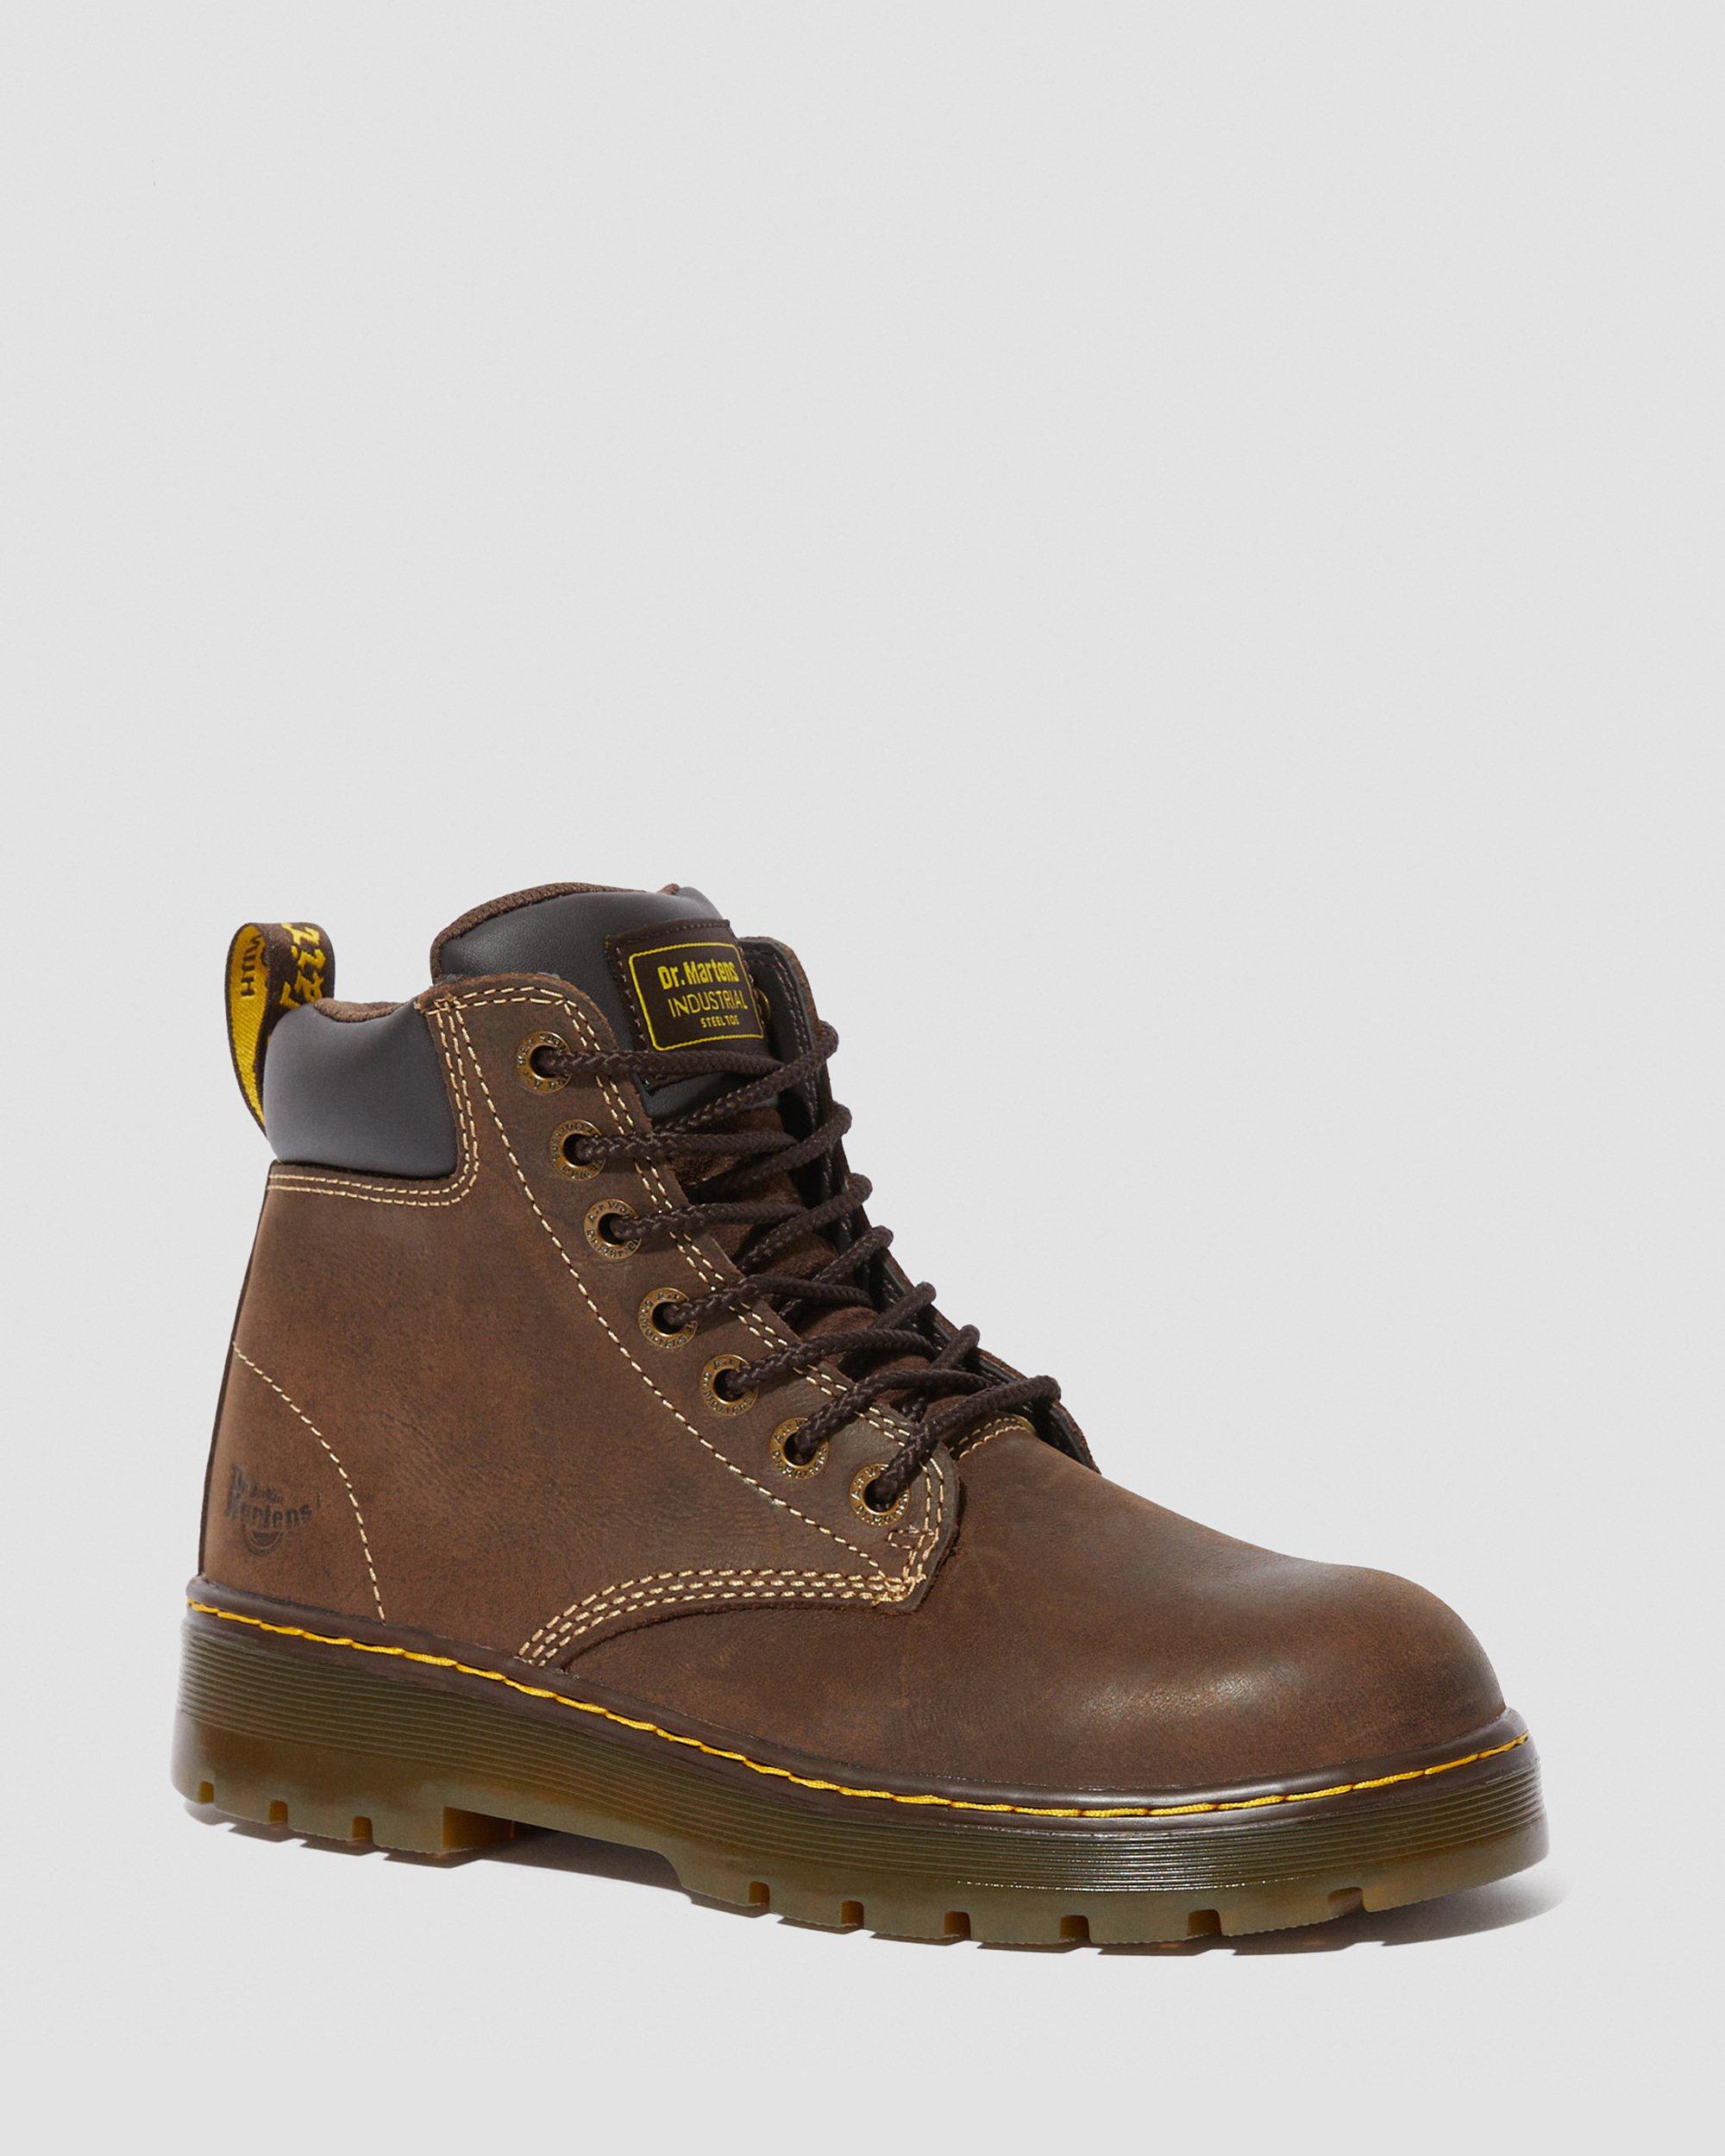 Winch Steel Toe Work Boots in Dark Brown | Dr. Martens